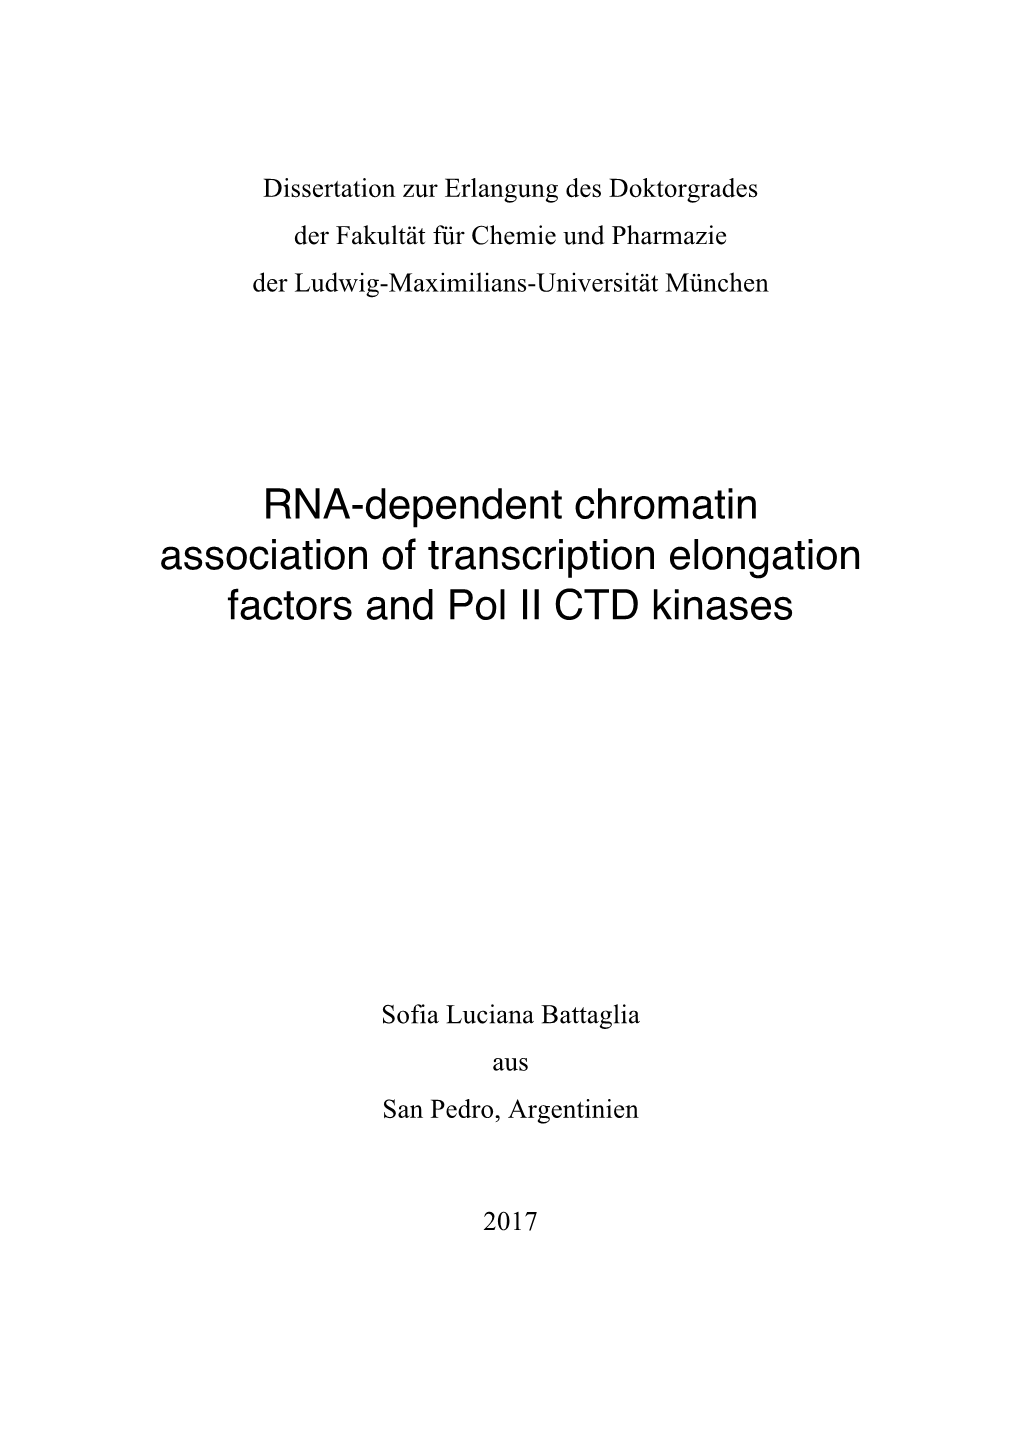 RNA-Dependent Chromatin Association of Transcription Elongation Factors and Pol II CTD Kinases